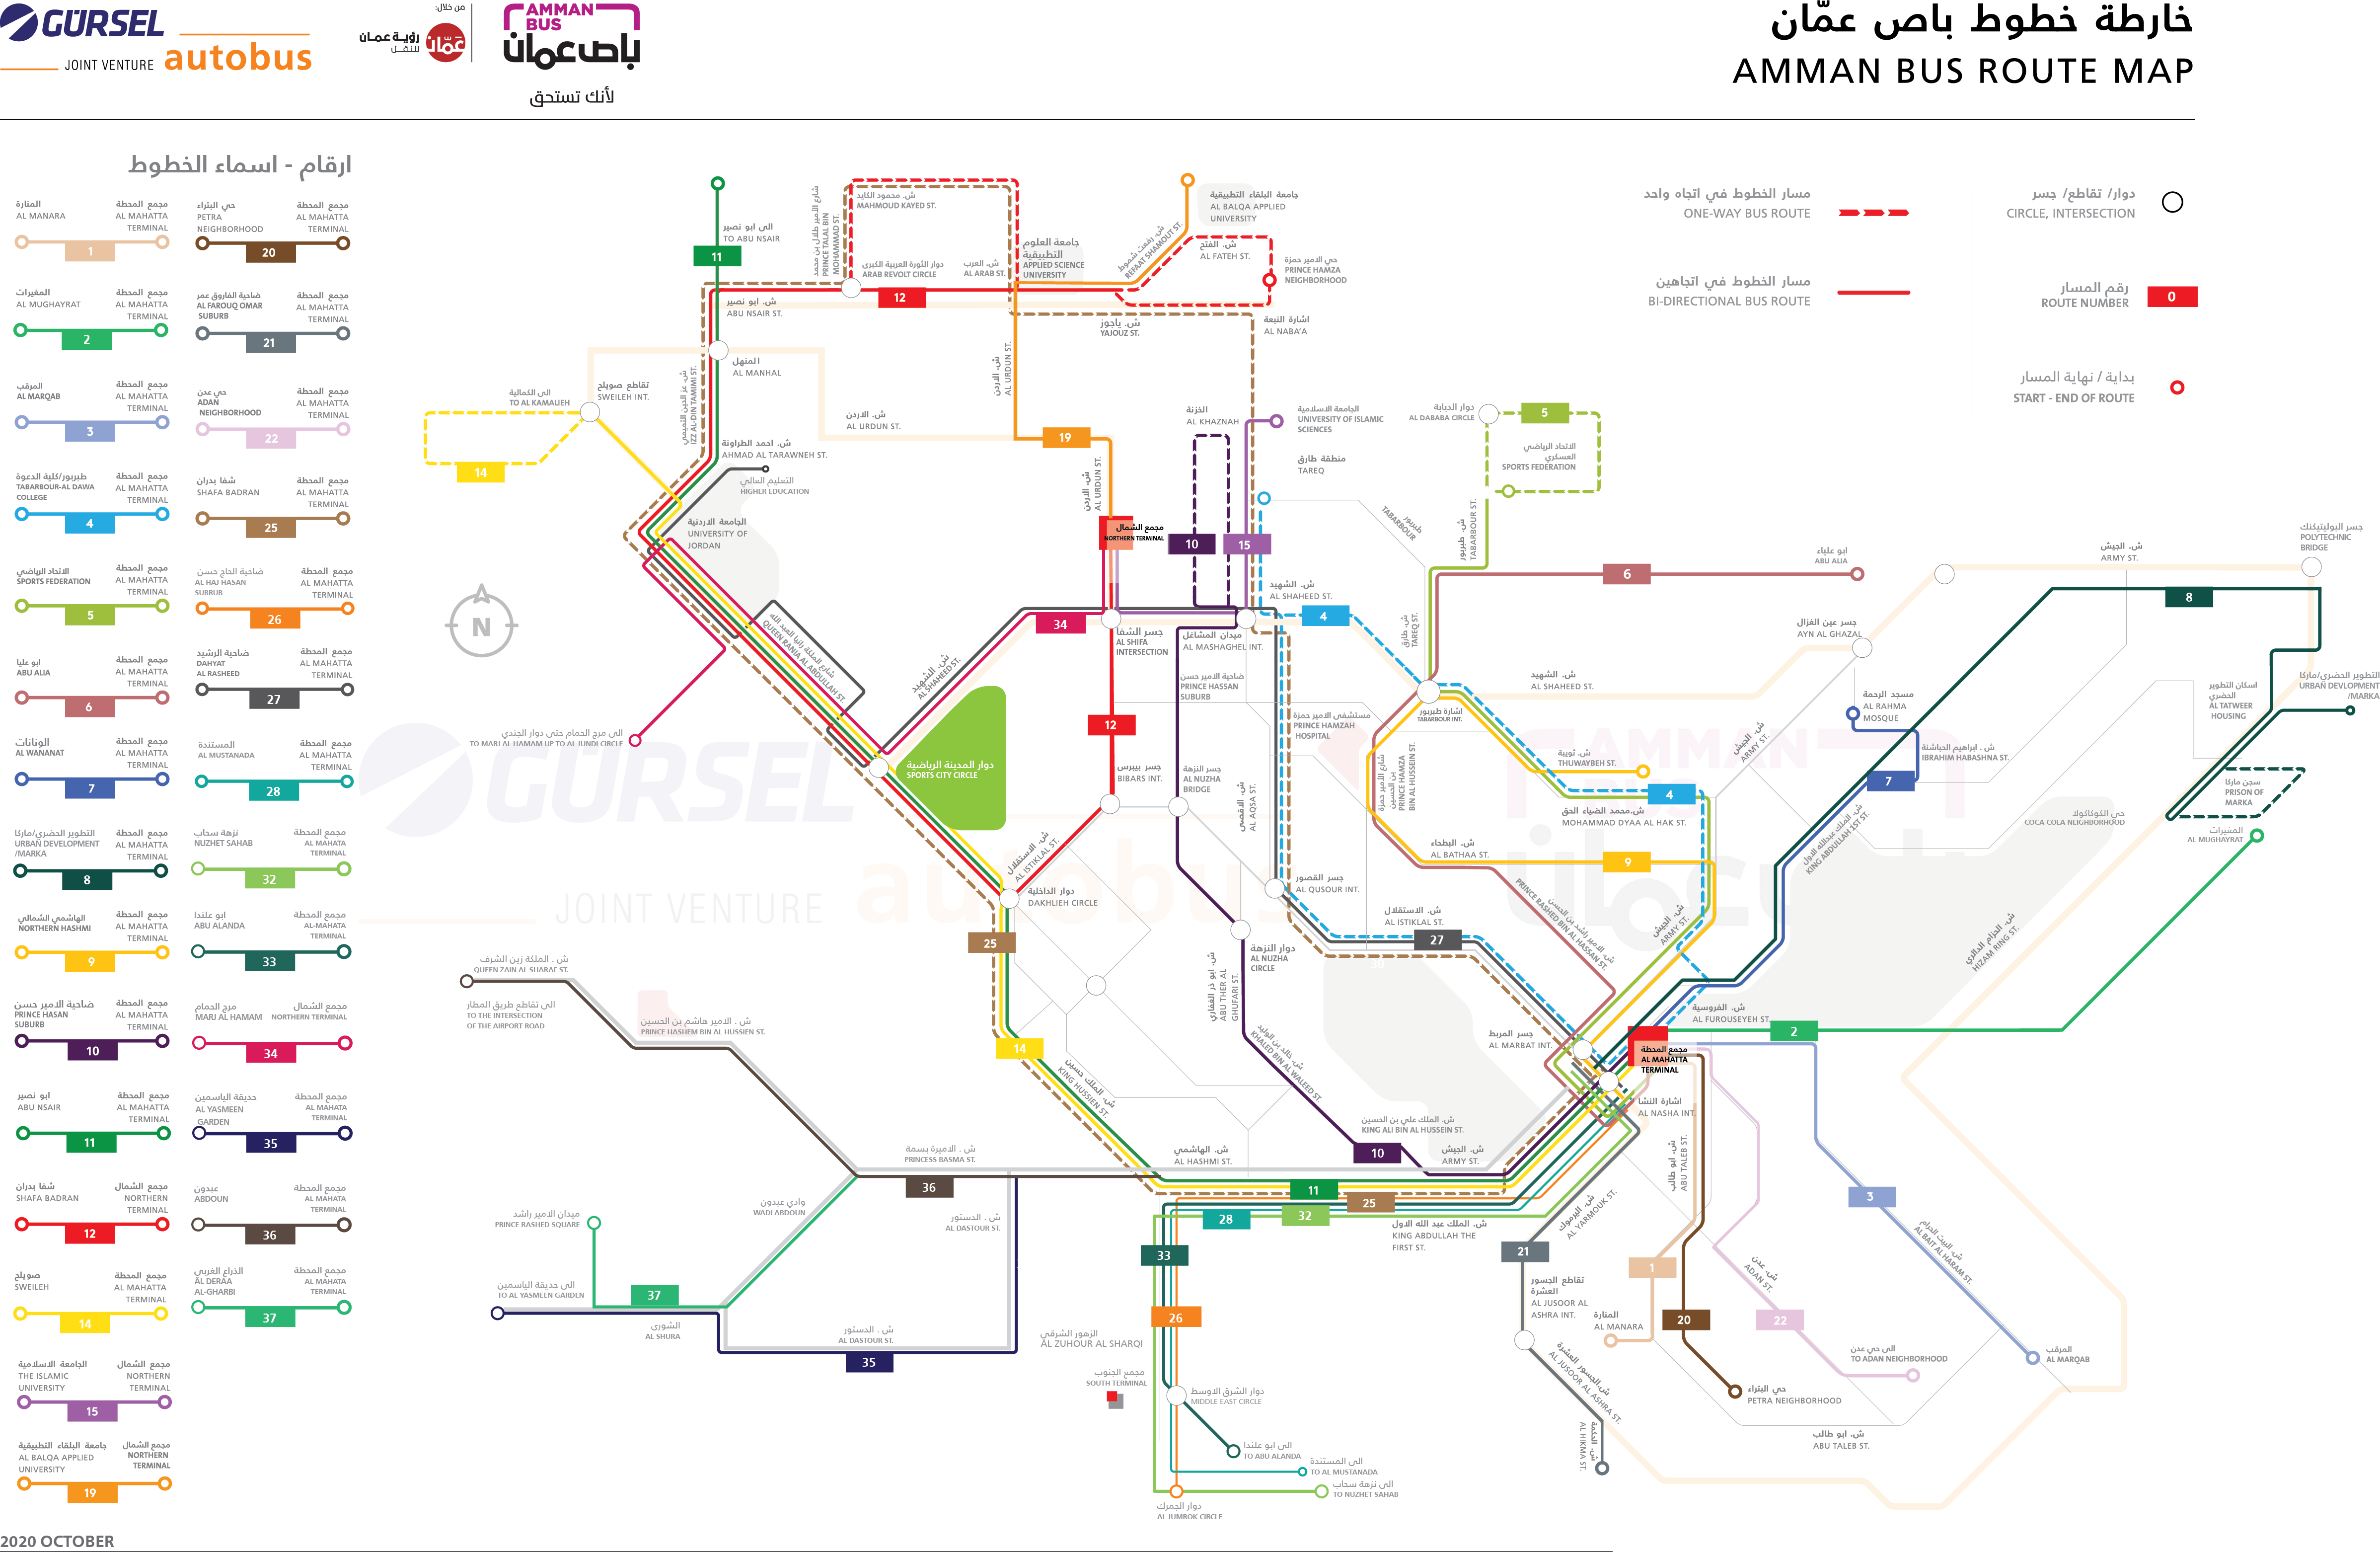 Amman Bus Route Network Map